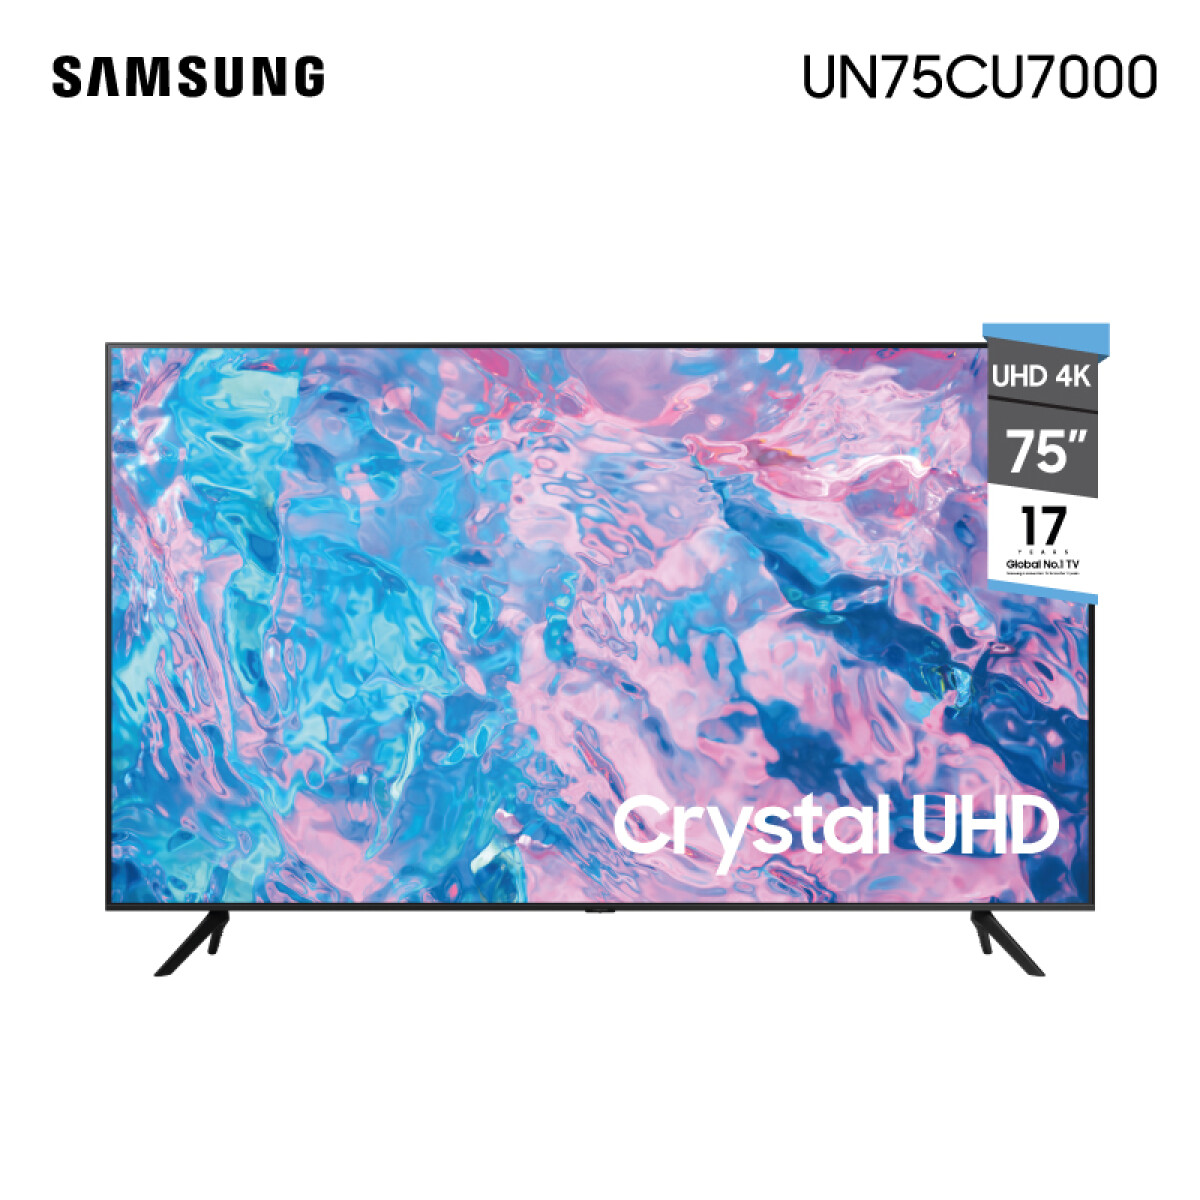 Led Smart Tv 75 Uhd 4K Samsung SAUN75CU7000 - 001 